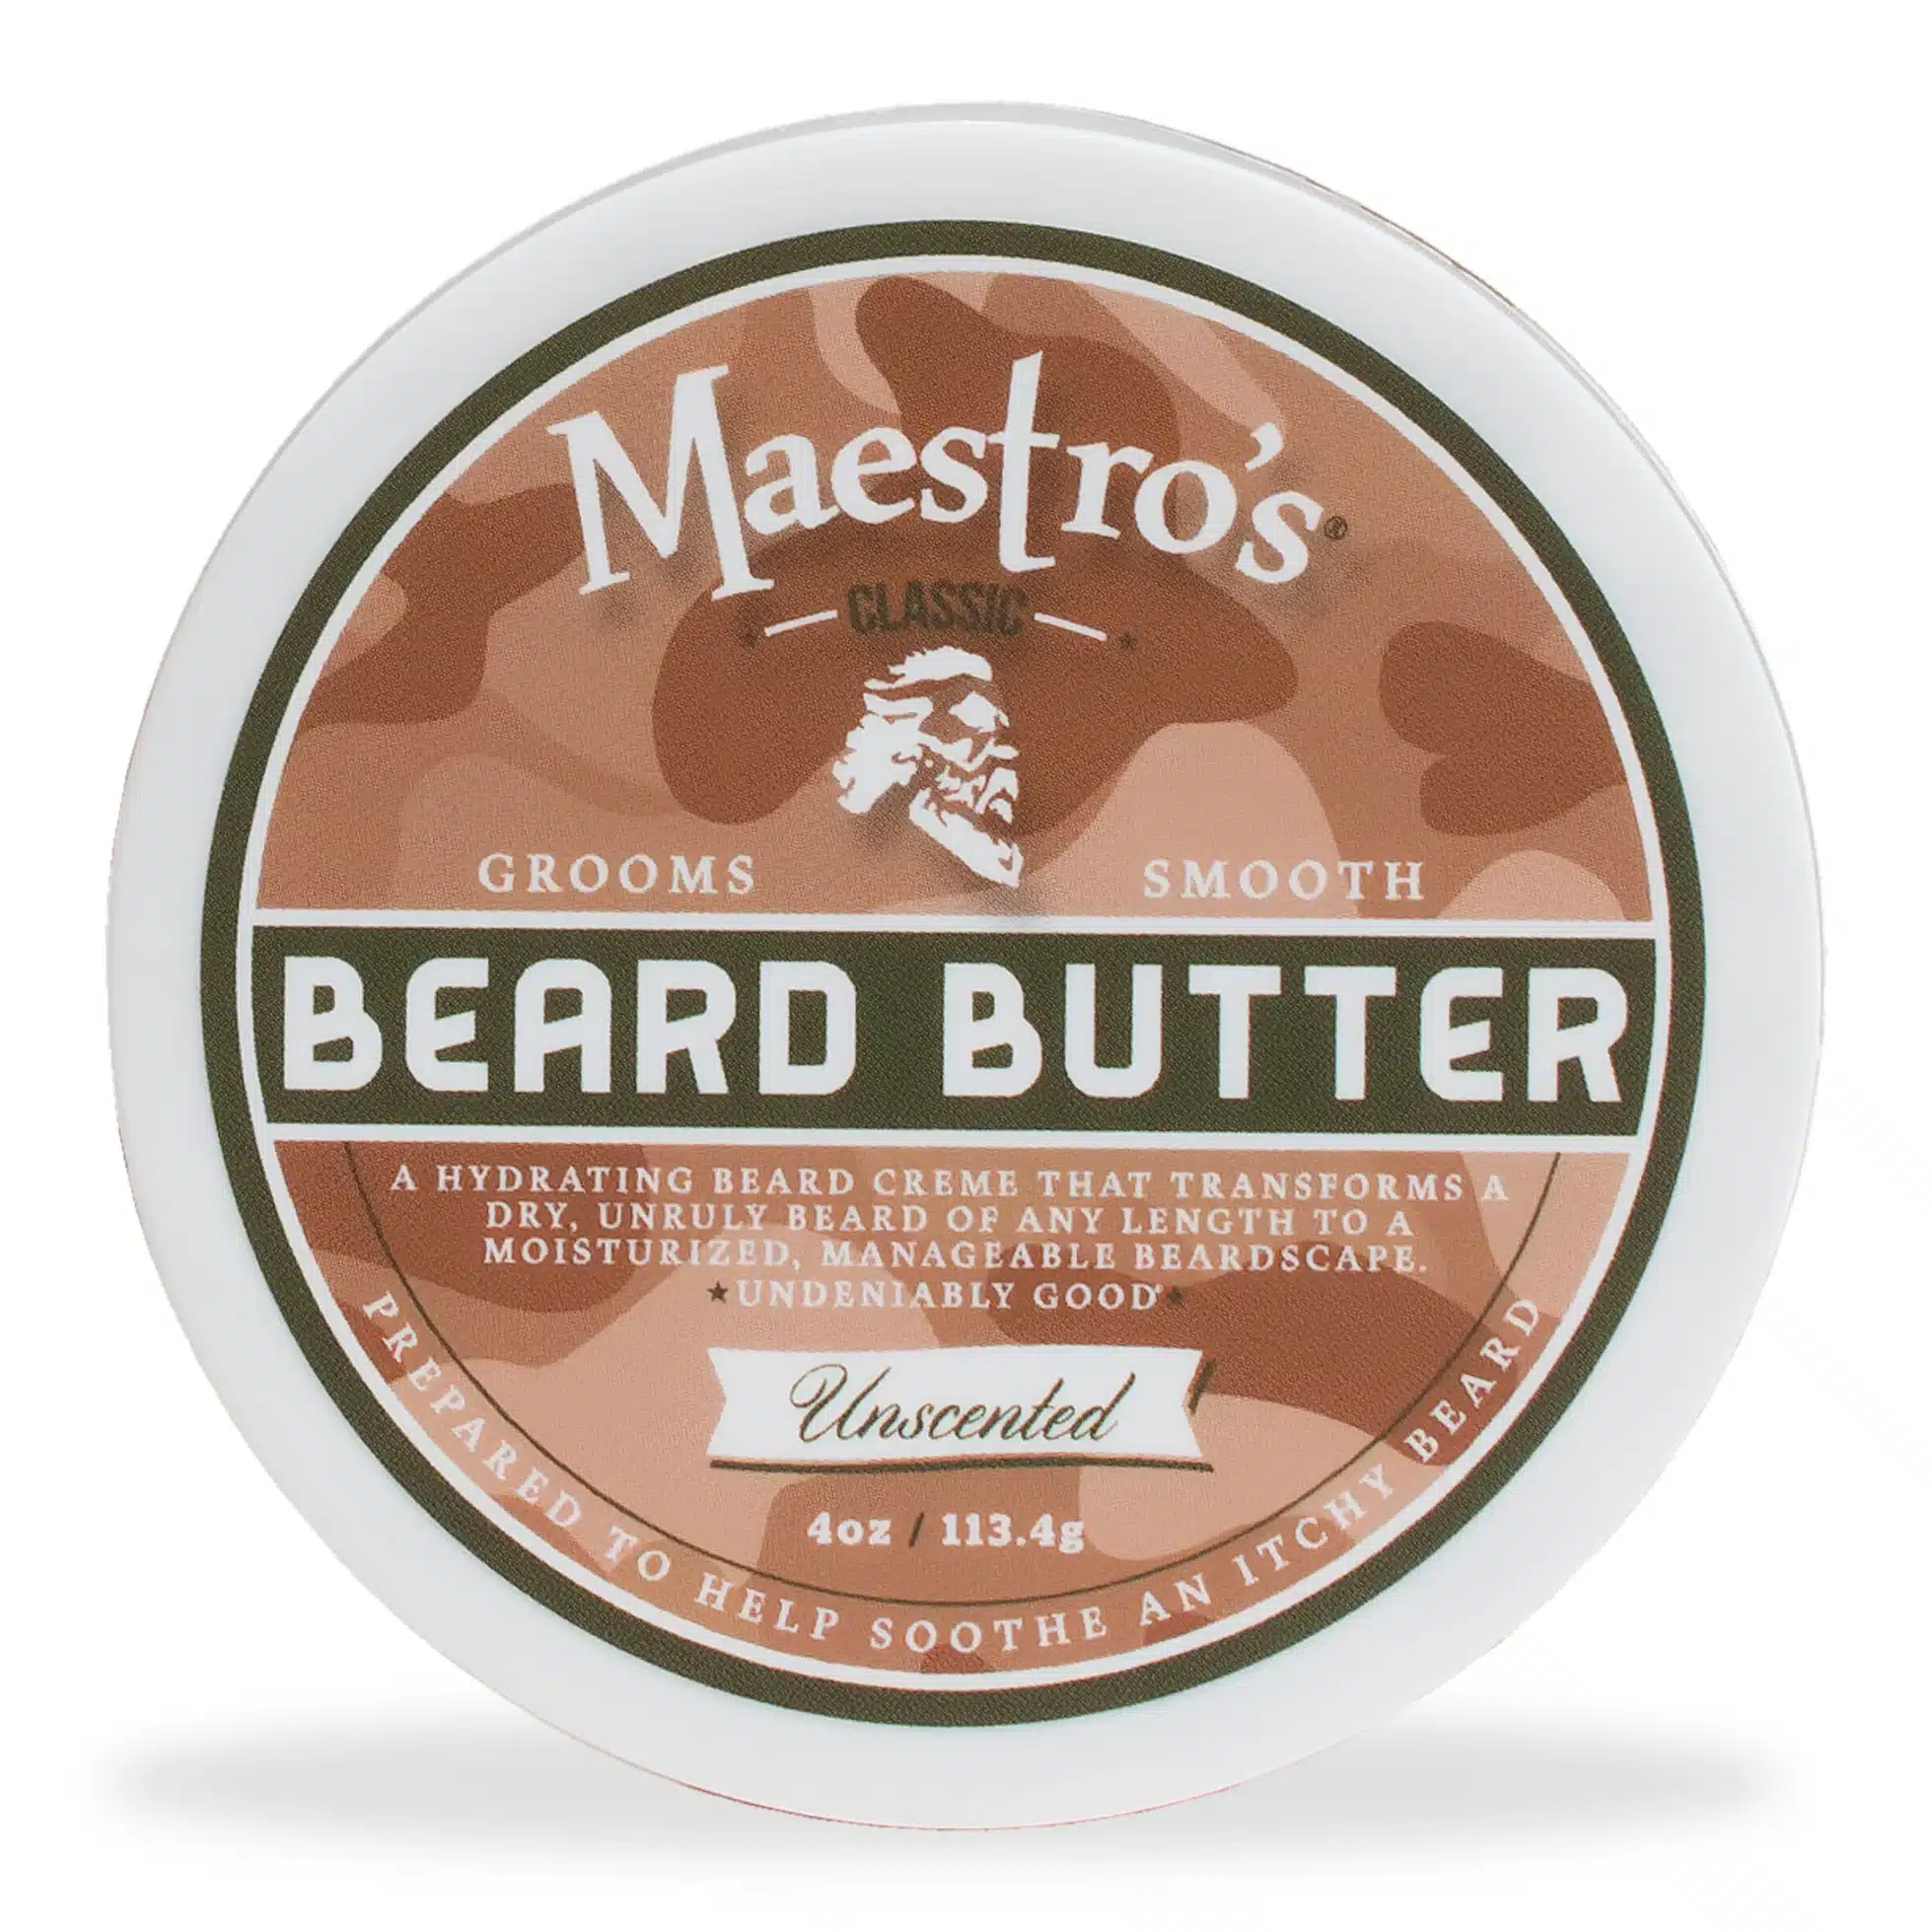 Maestros Beard Butter 4oz - Unscented Top